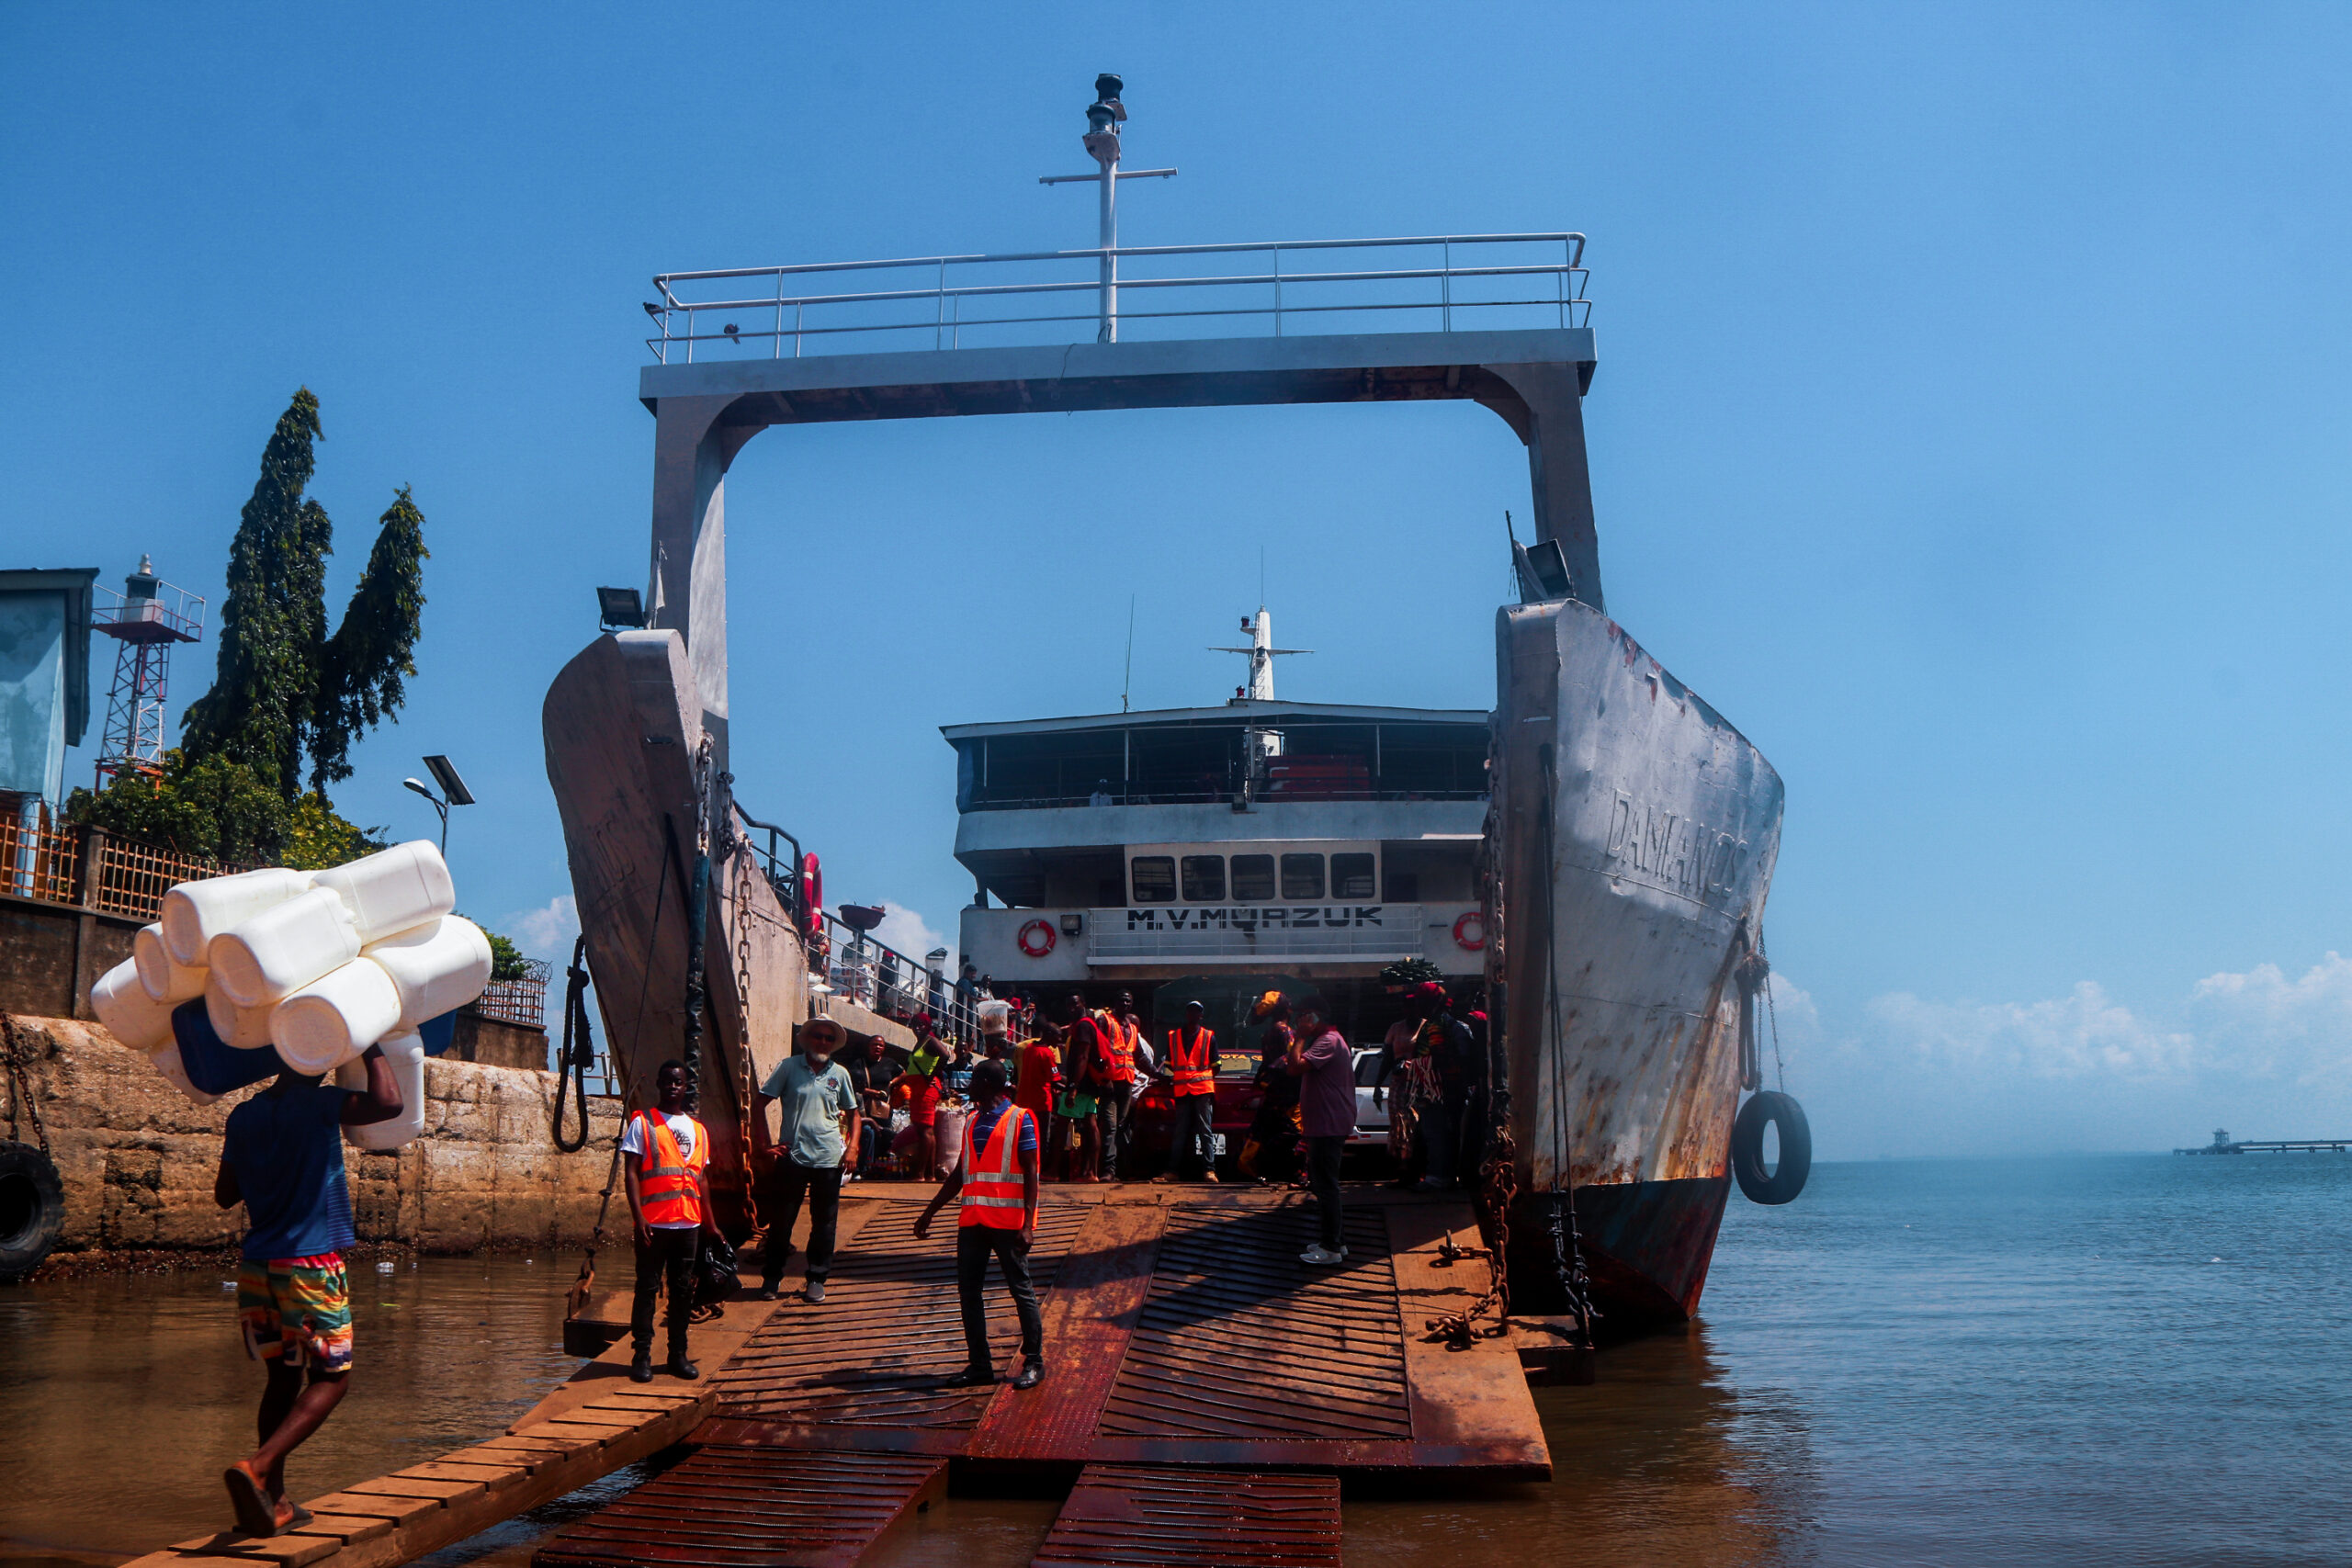 Passengers boarding the MV Murzuk ferry in 2022 (CREDIT: OCCRP)